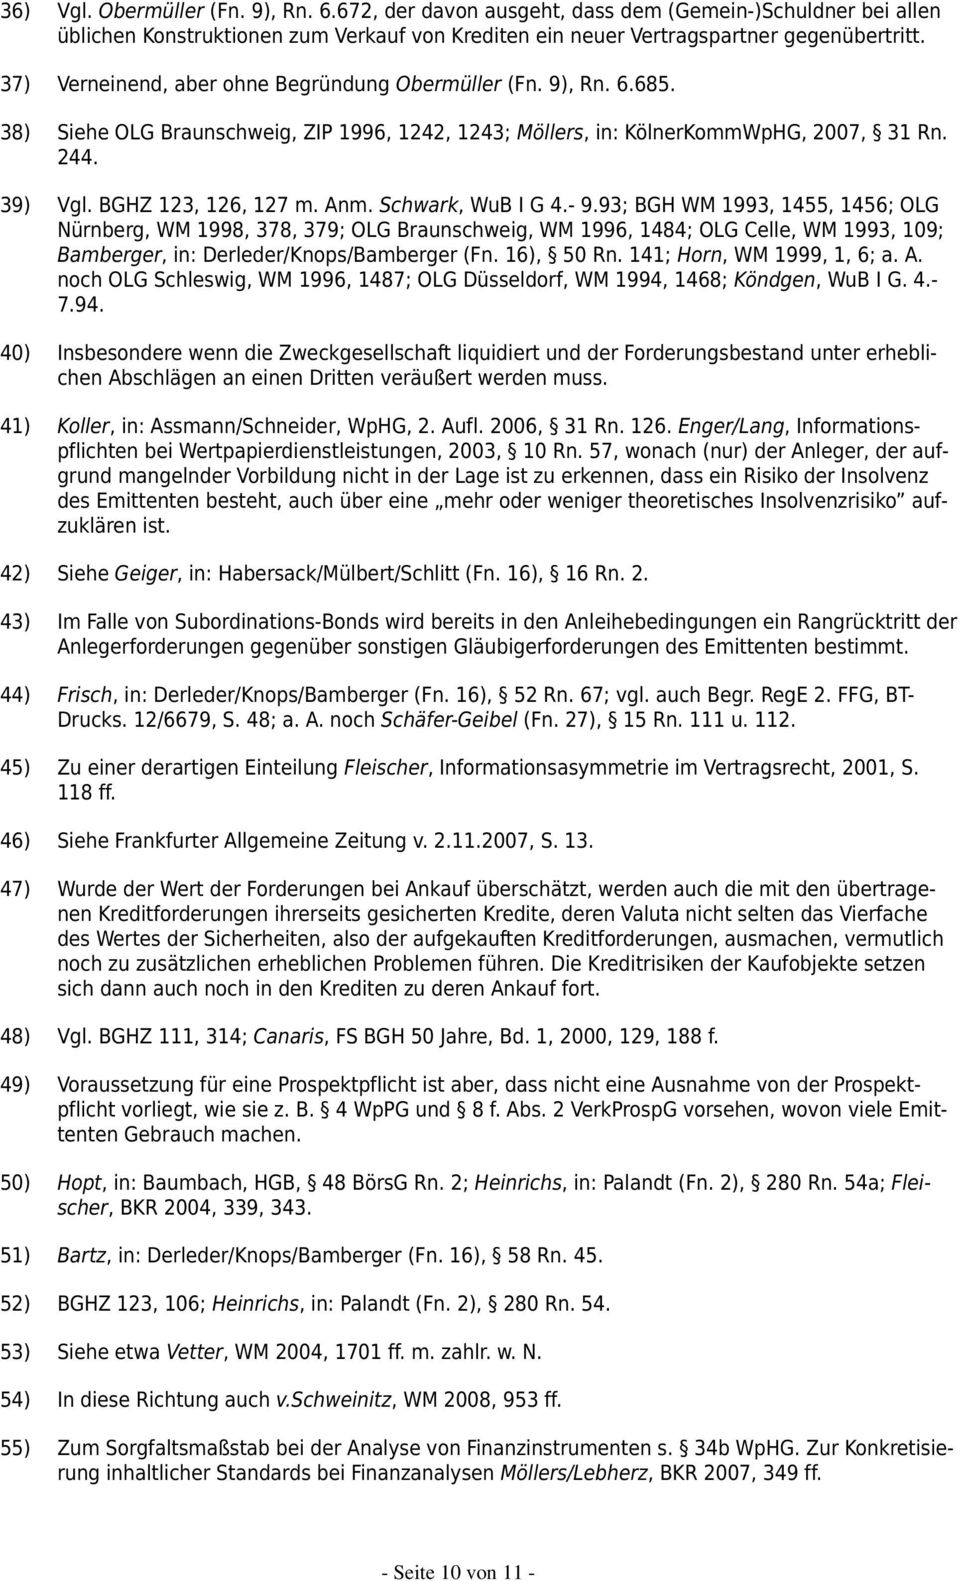 Schwark, WuB I G 4.- 9.93; BGH WM 1993, 1455, 1456; OLG Nürnberg, WM 1998, 378, 379; OLG Braunschweig, WM 1996, 1484; OLG Celle, WM 1993, 109; Bamberger, in: Derleder/Knops/Bamberger (Fn. 16), 50 Rn.